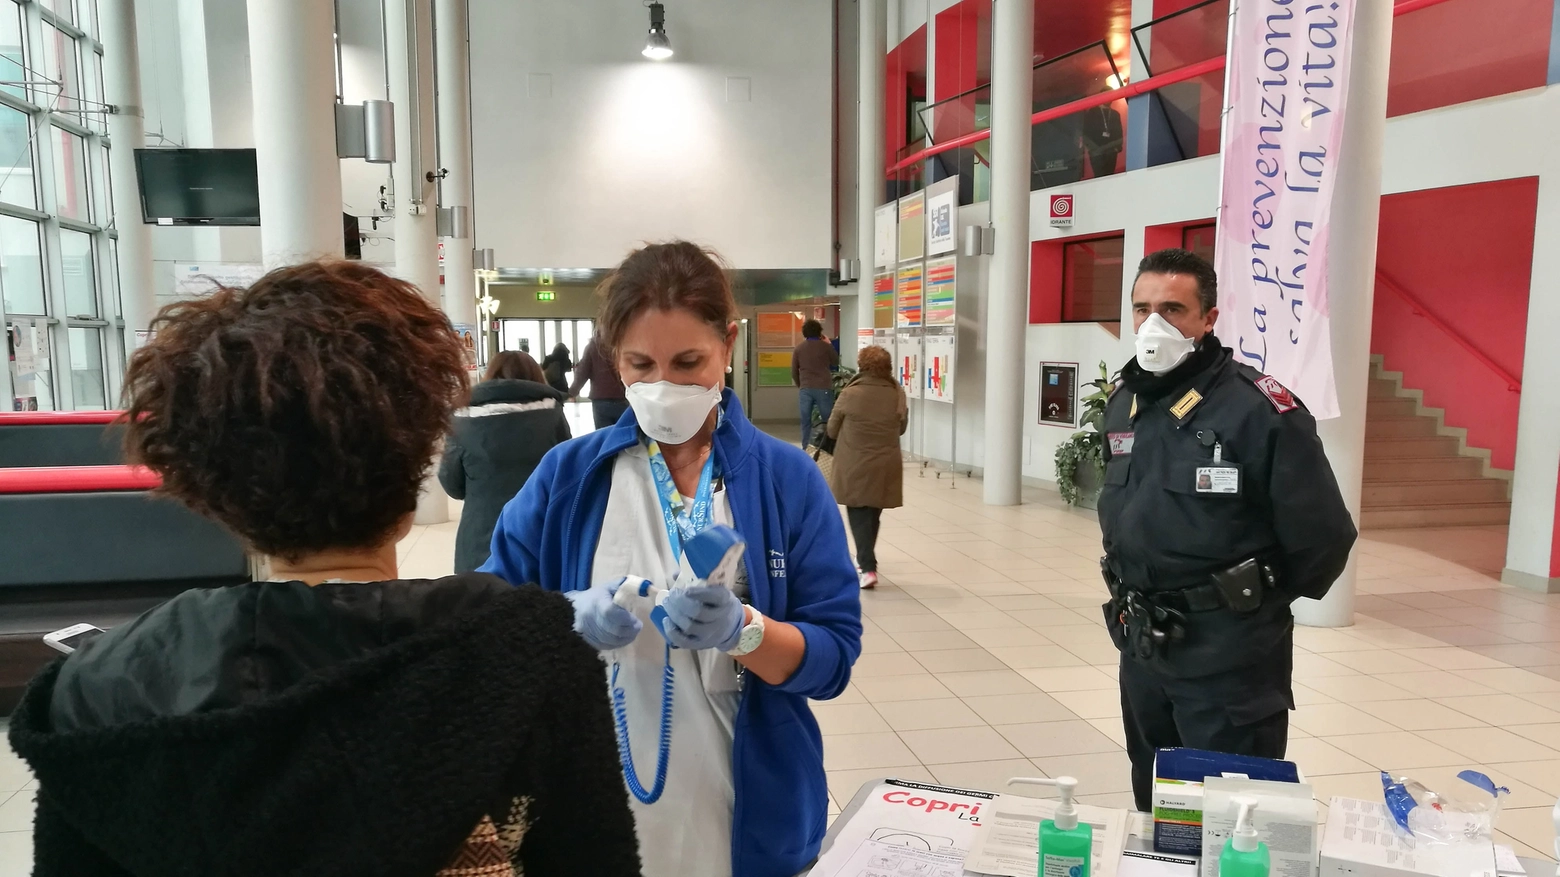 Emergenza Coronavirus in tutti gli ospedali d'Italia